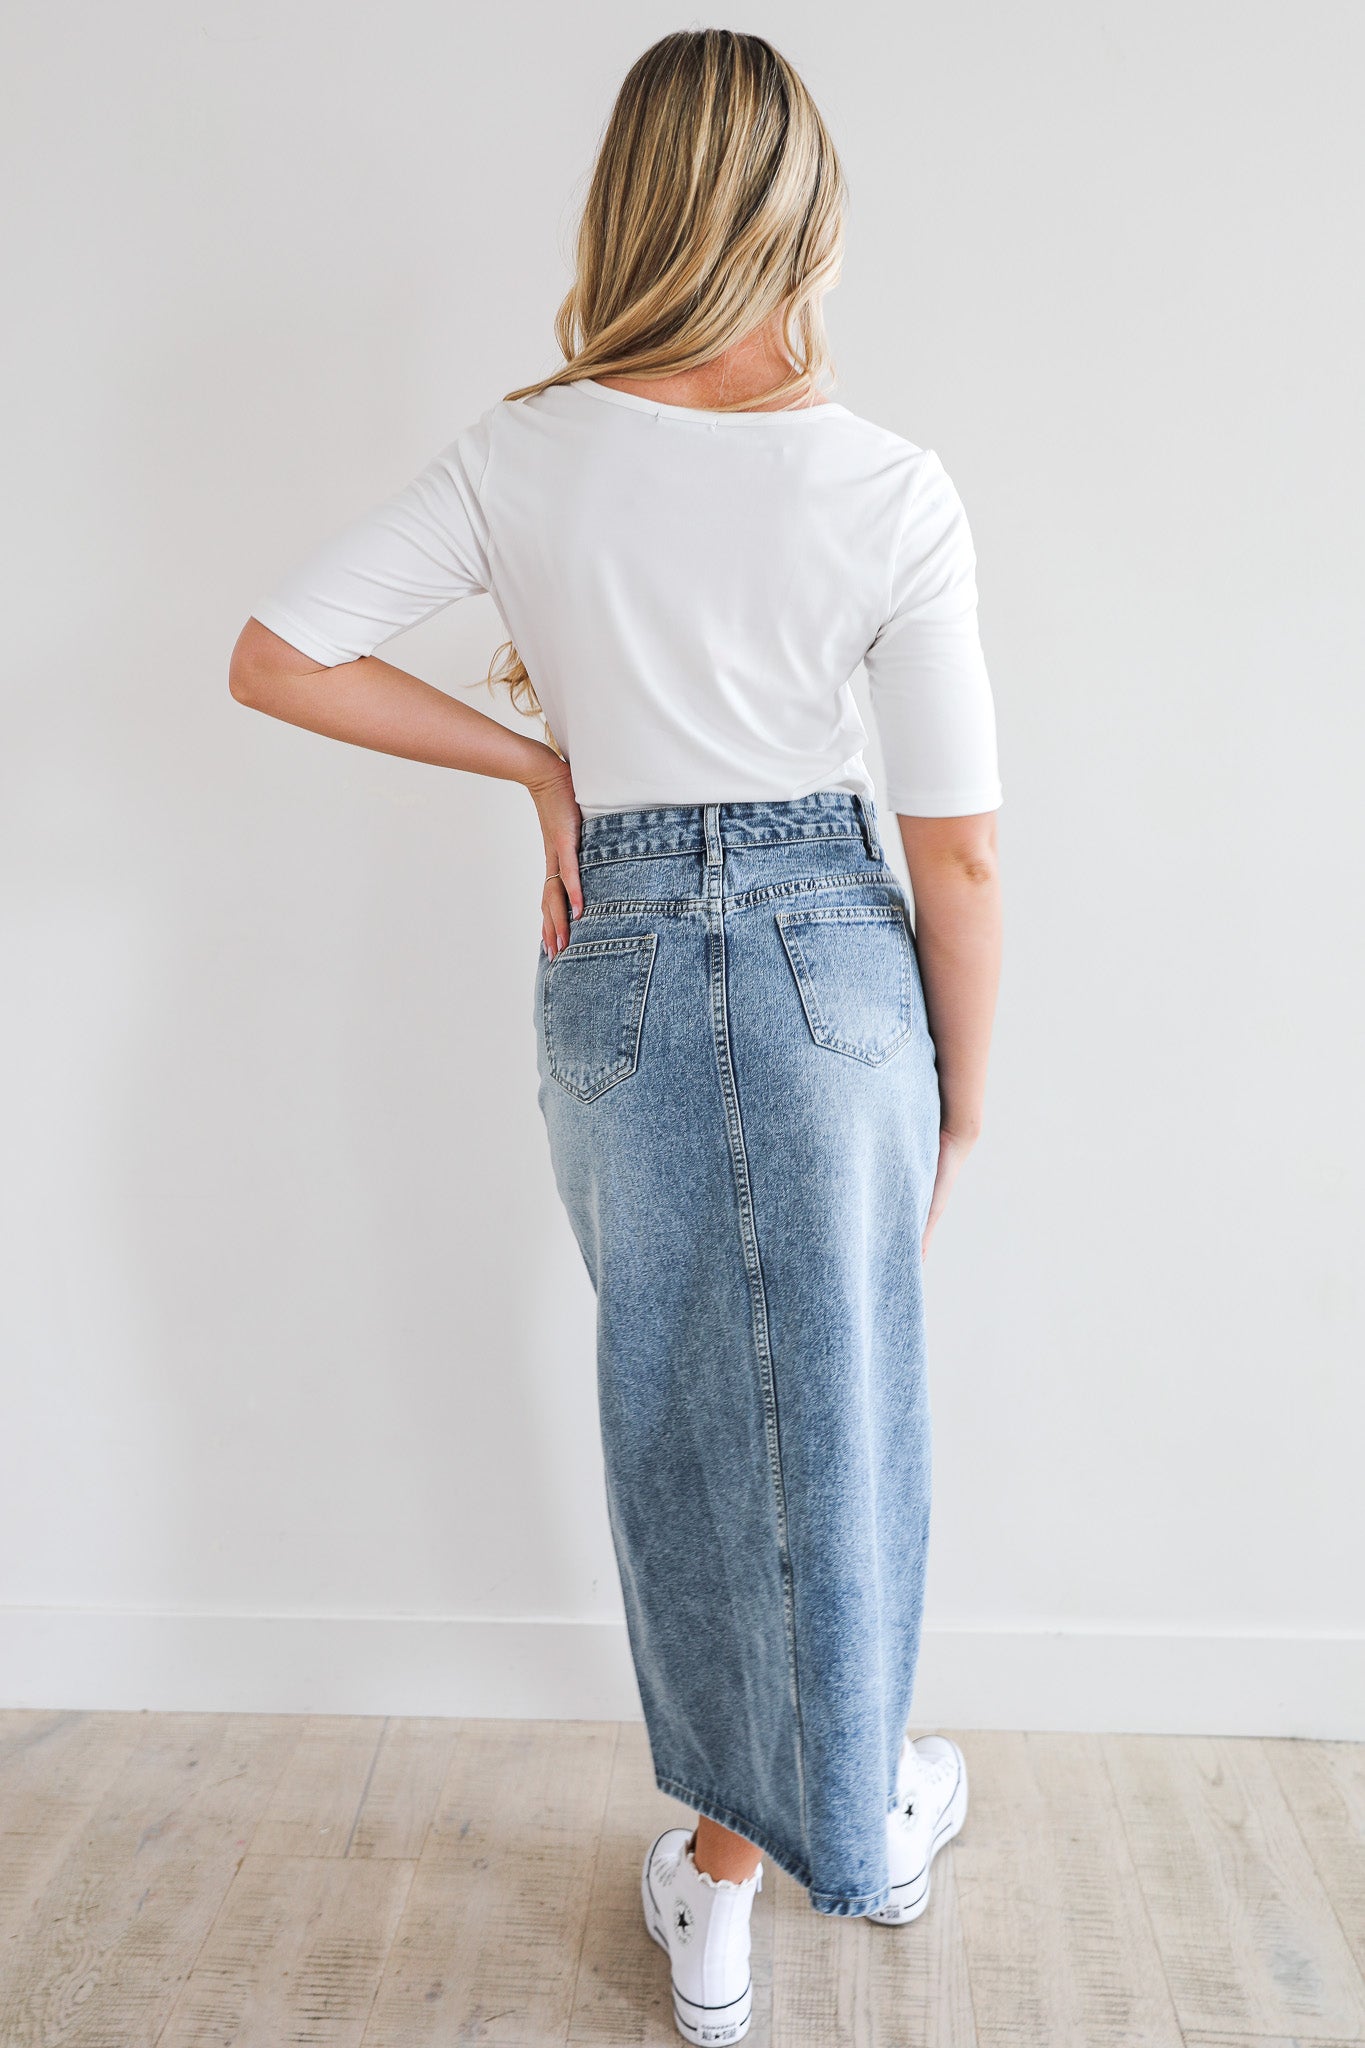 XFYS Summer denim half-length skirt female long loose slime base high waist  skirt-Vintage light blue_M : Amazon.co.uk: Fashion